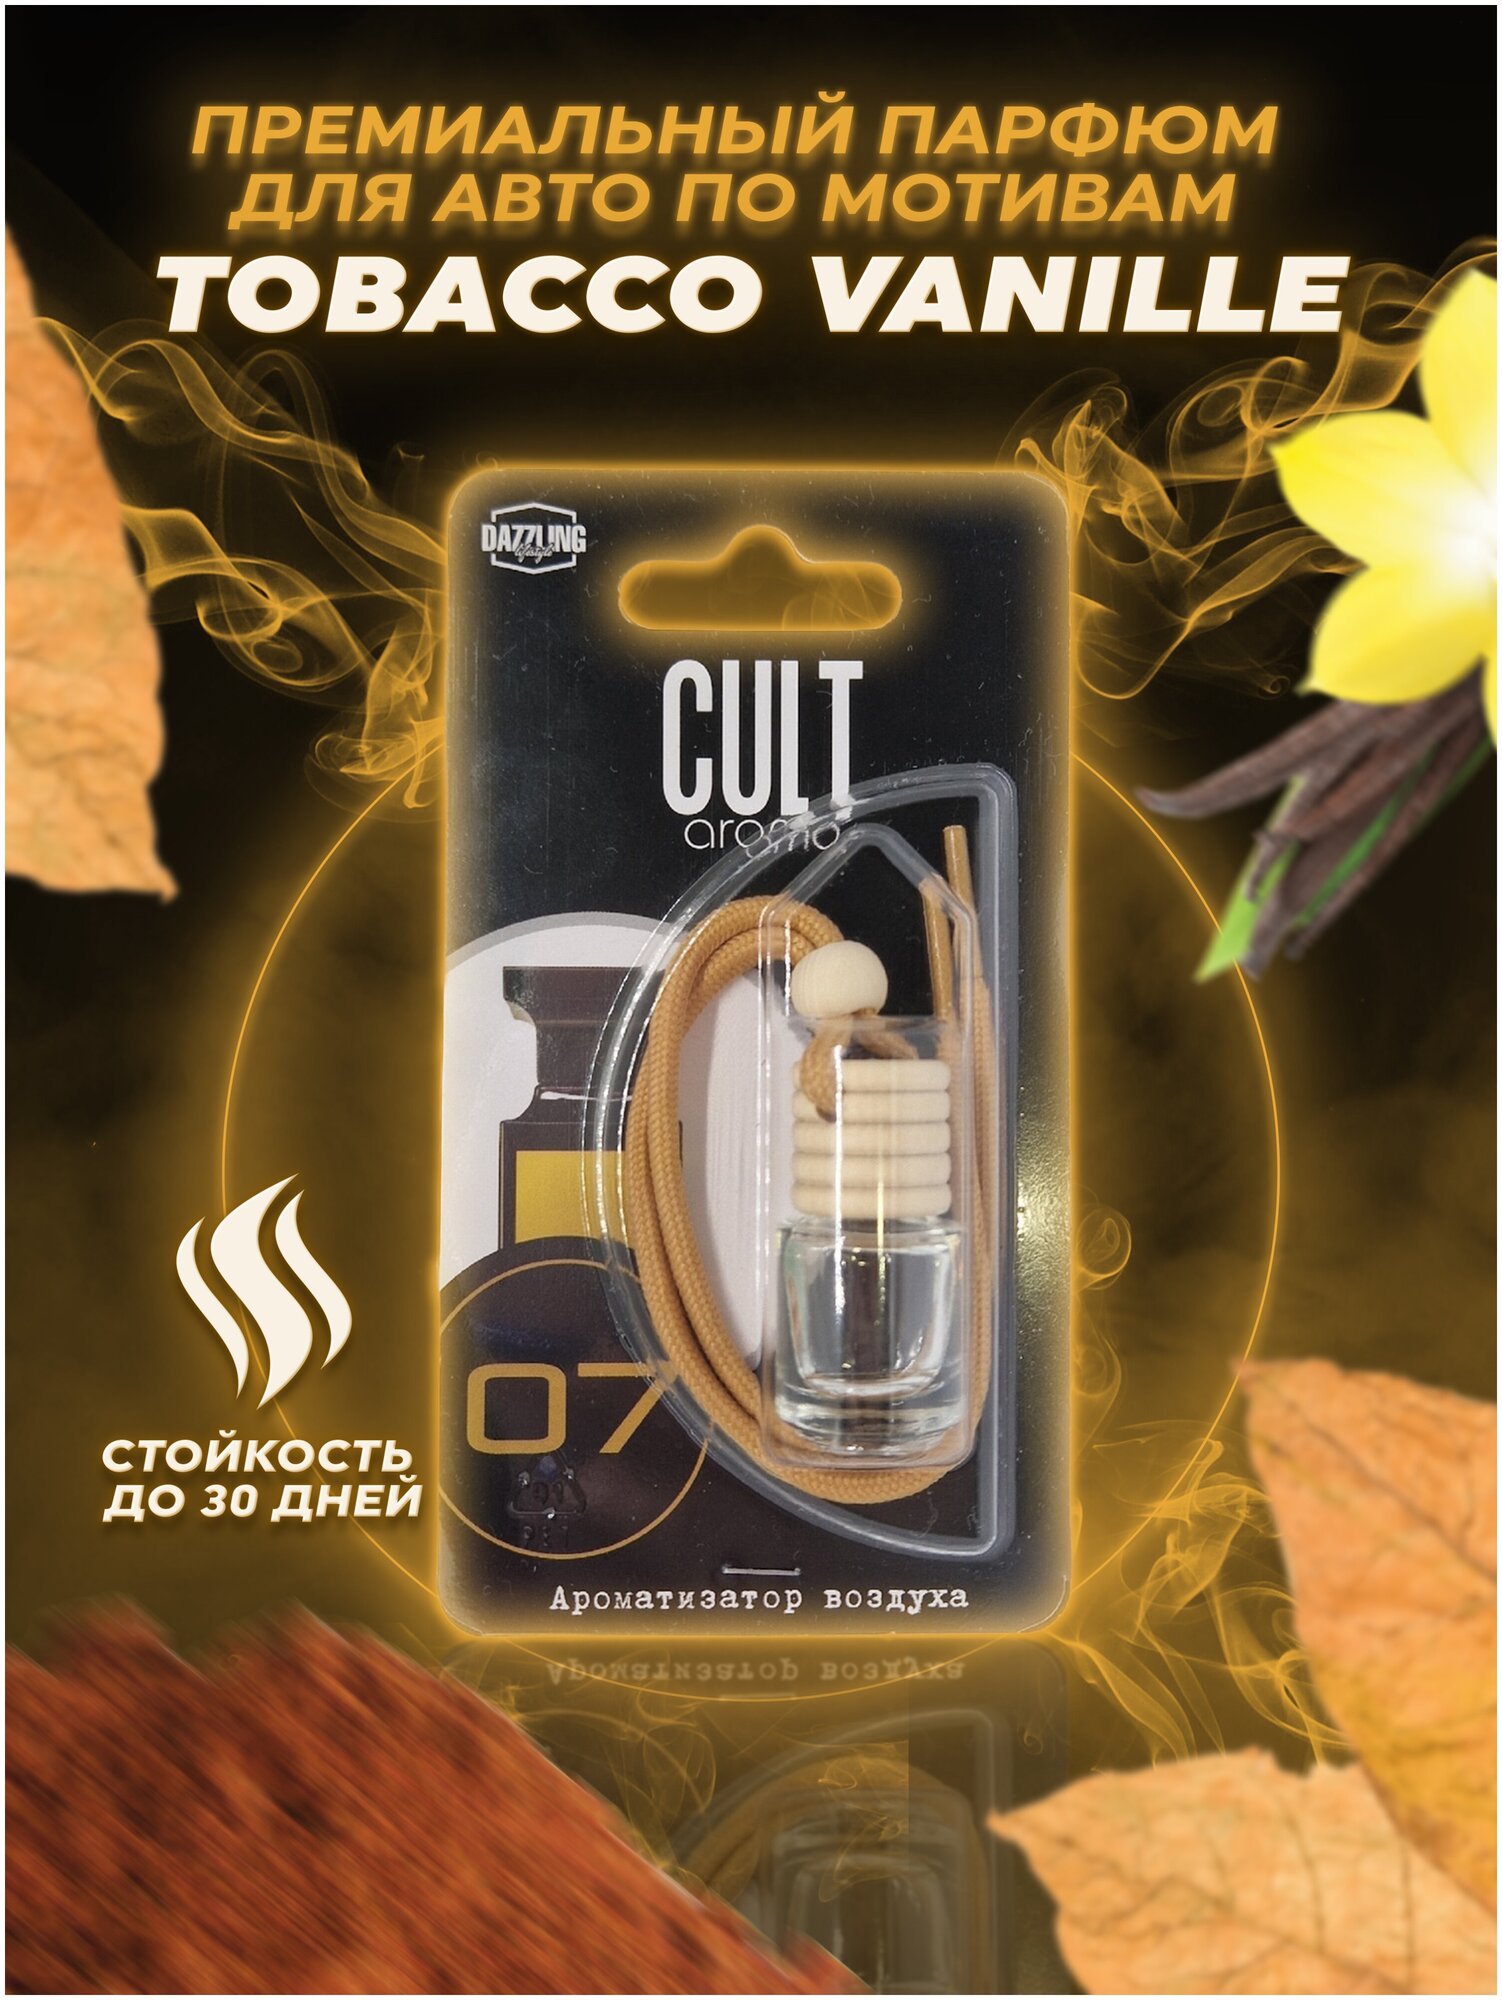 Ароматизатор для автомобиля и дома " Tobacco Vanille", автопарфюм, вонючка, пахучка, подарок, в машину.